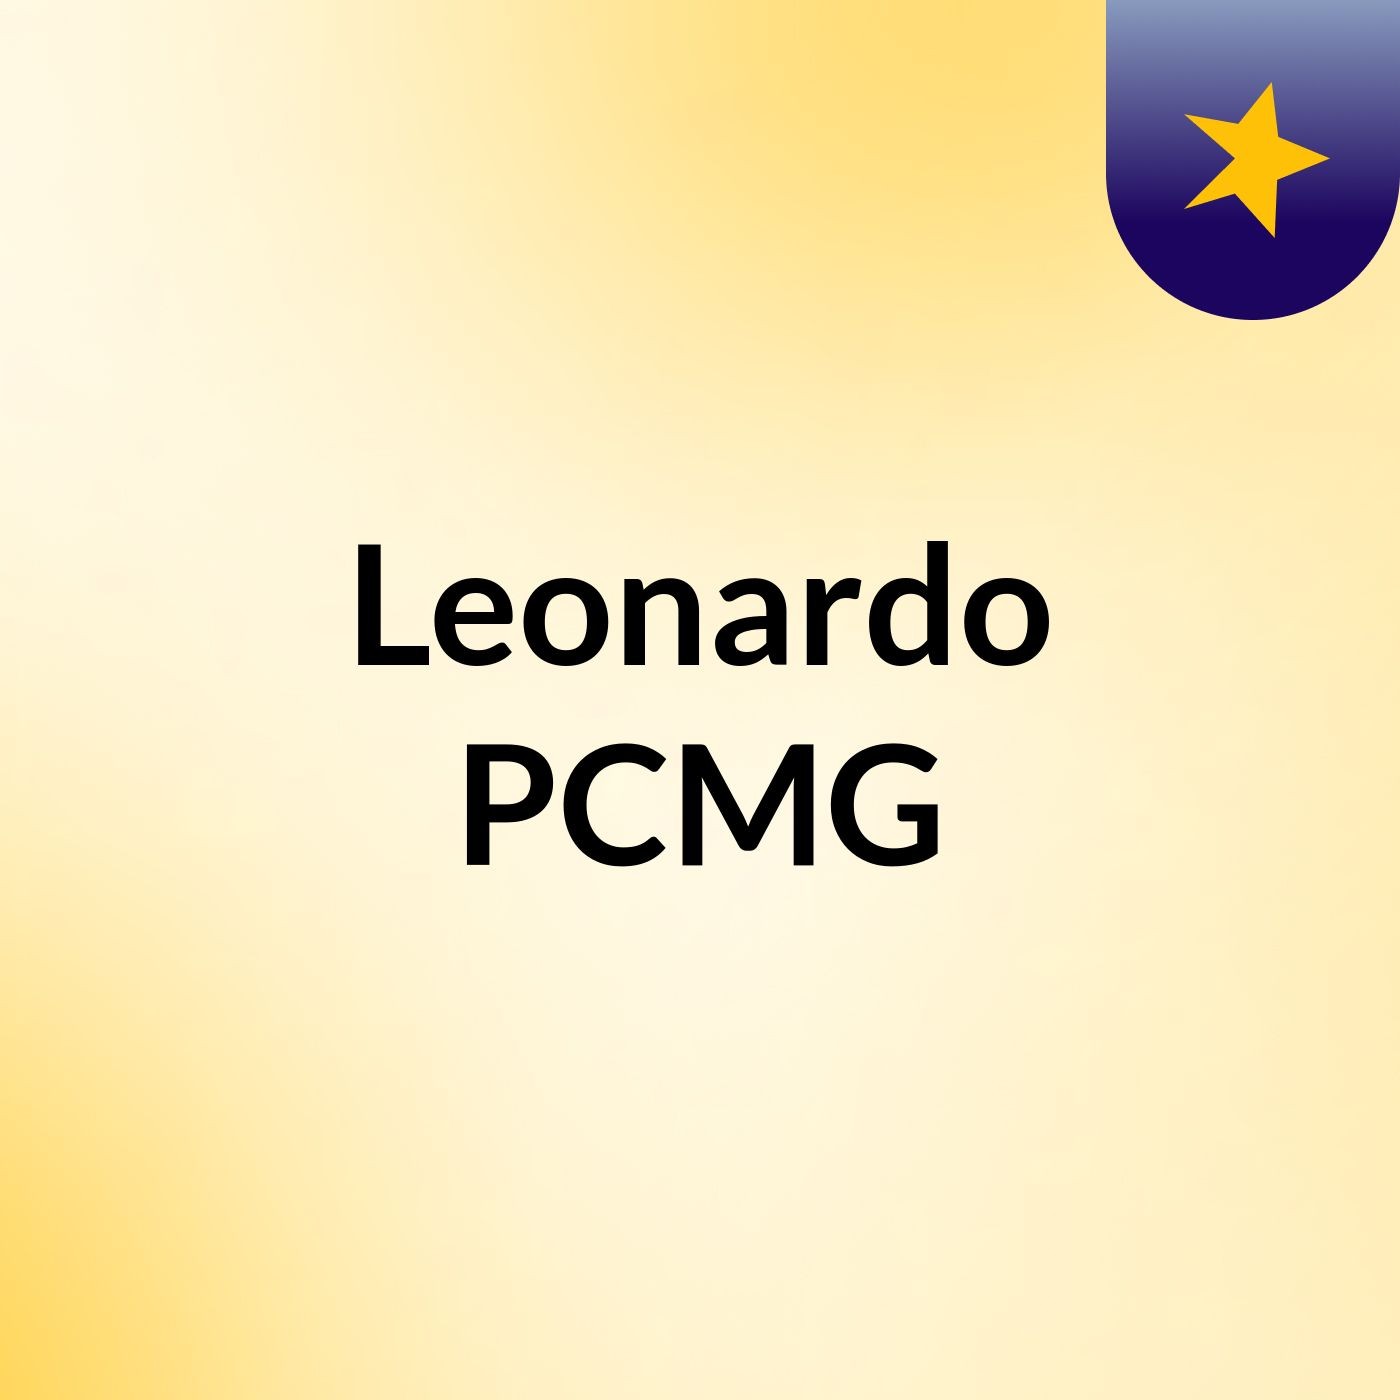 Leonardo PCMG